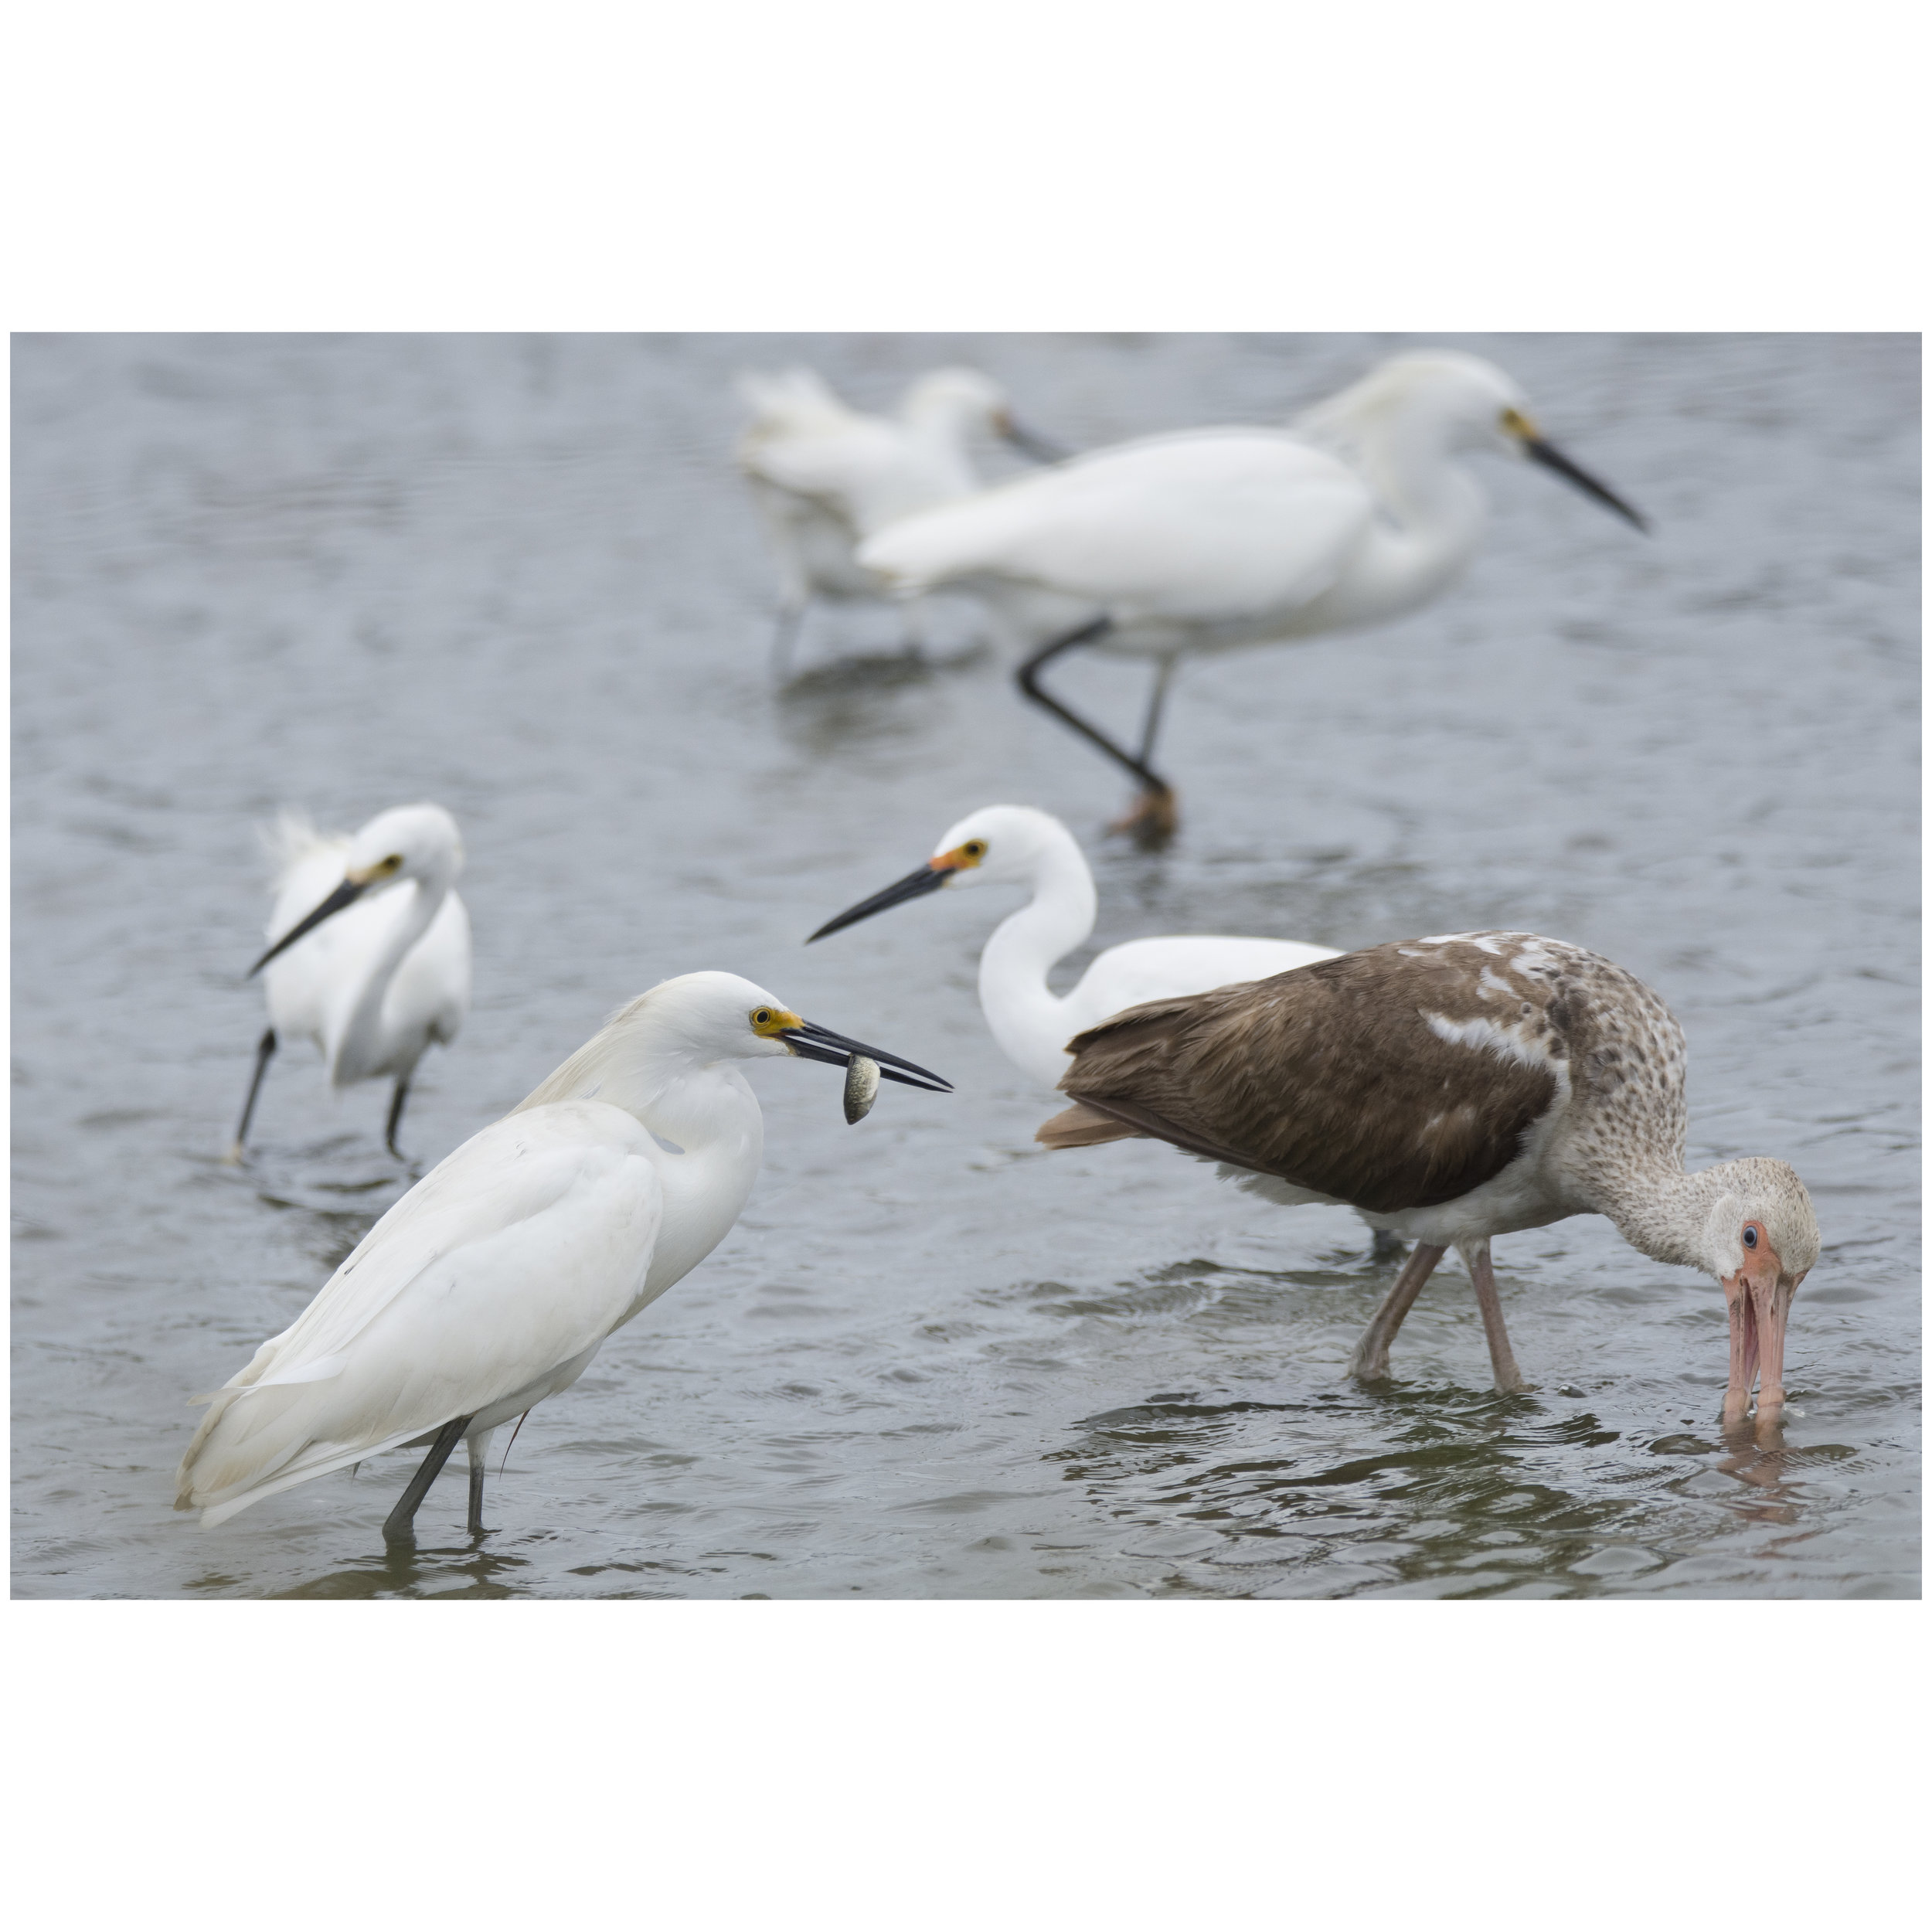  Snowy Egrets + White Ibis, 2018 